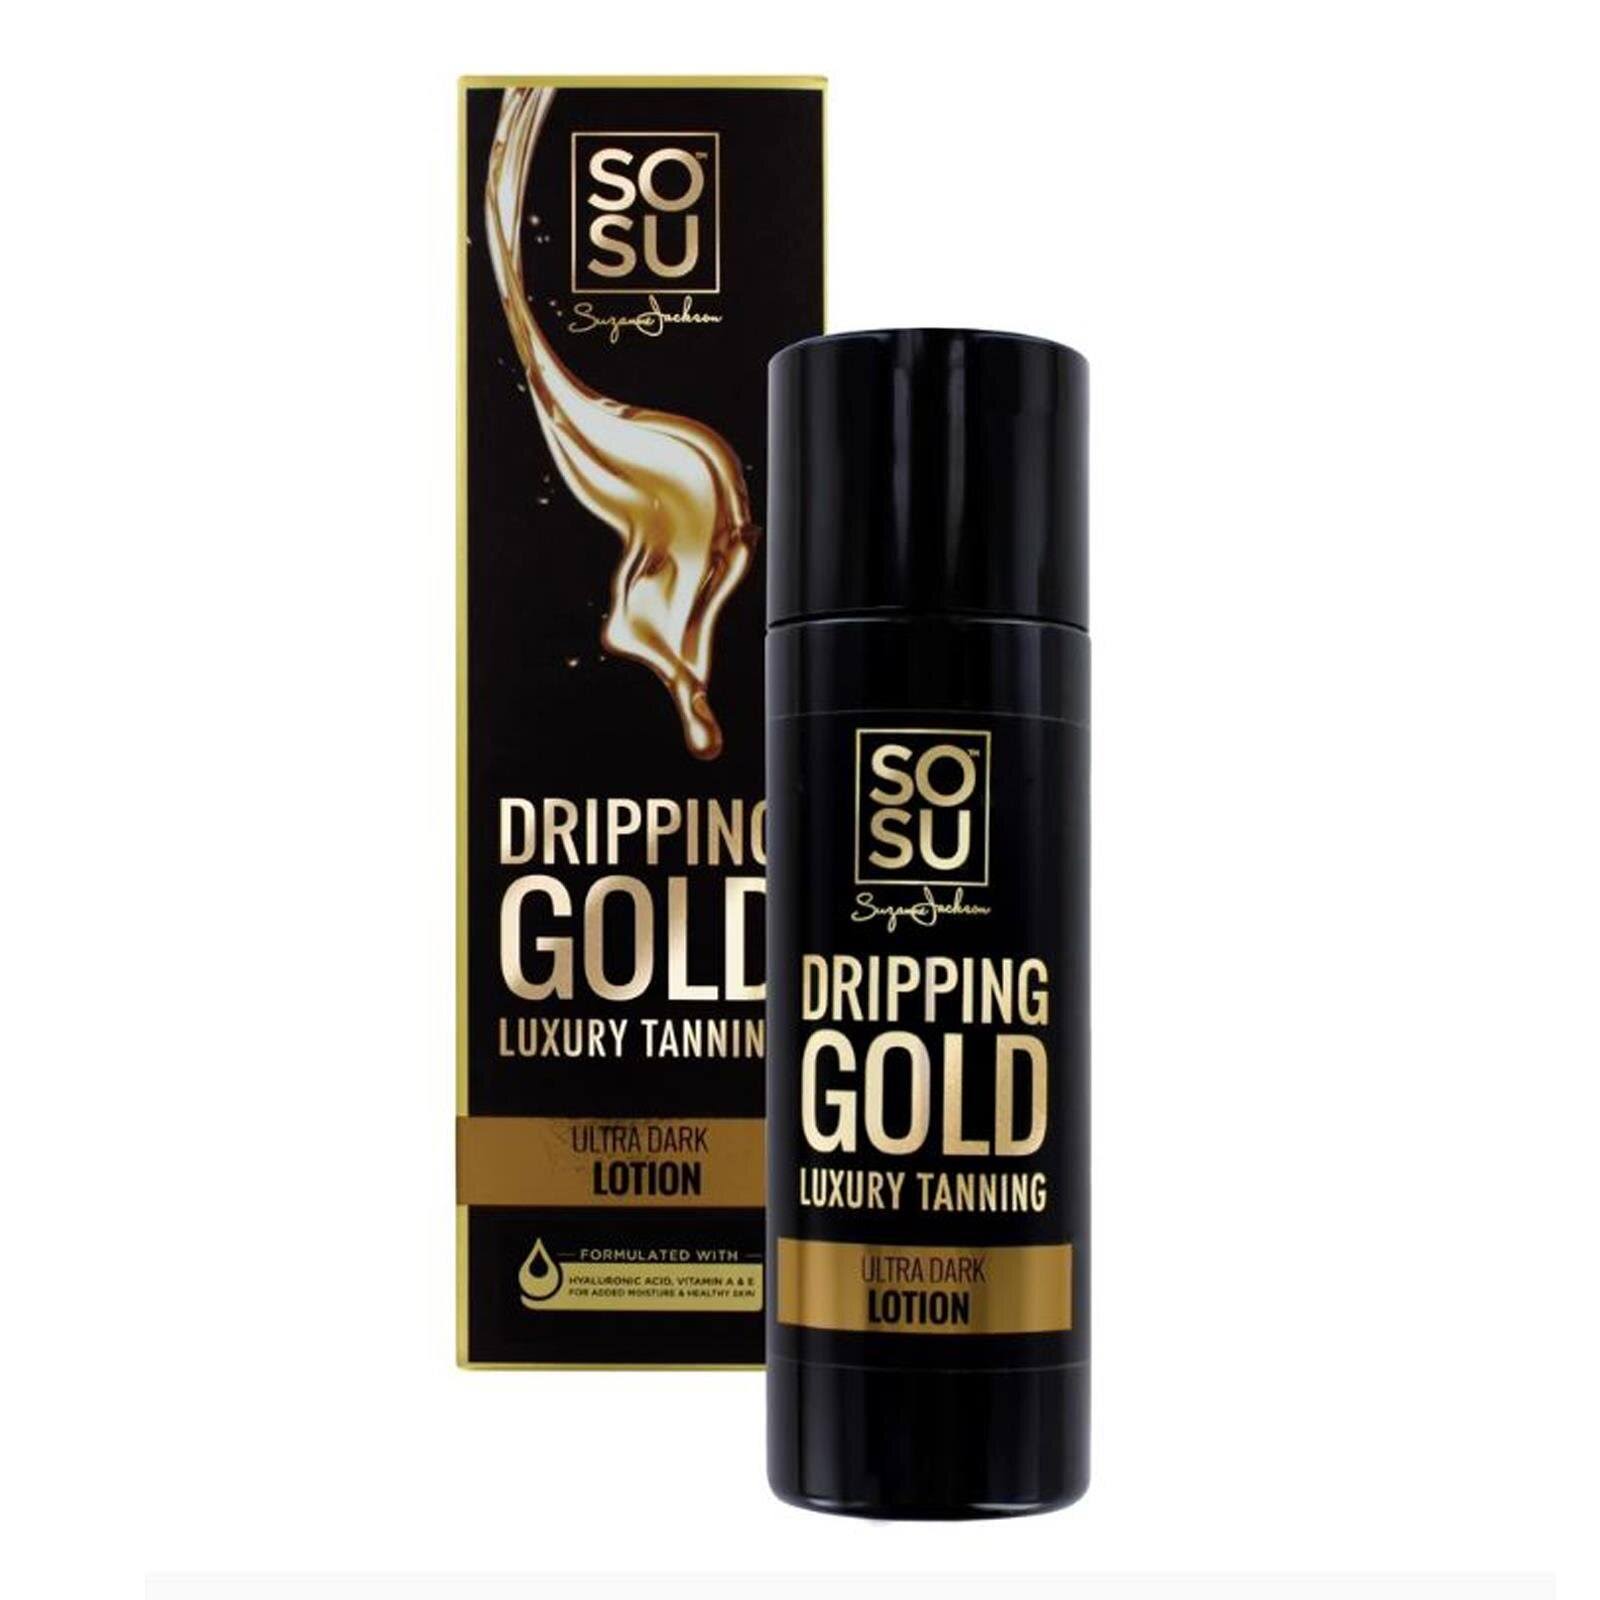 SoSu - Dripping Ultra Dark Lotion - 200ml - Gold